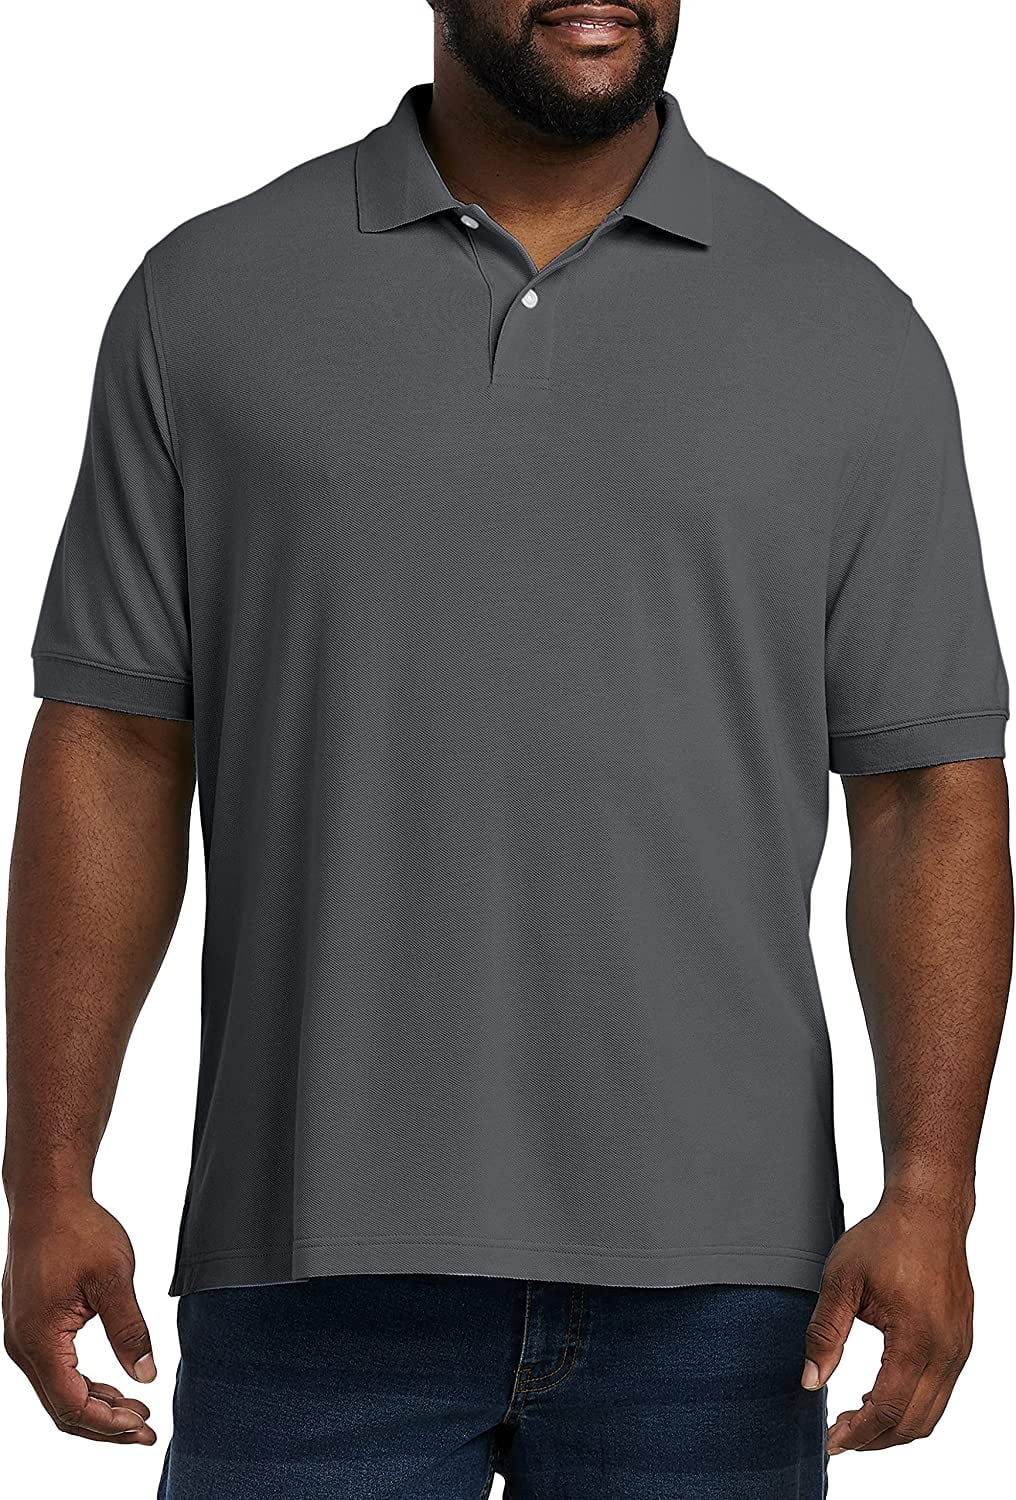 Big + Tall Essentials by DXL Piqué Mesh Short-Sleeve Polo Shirt